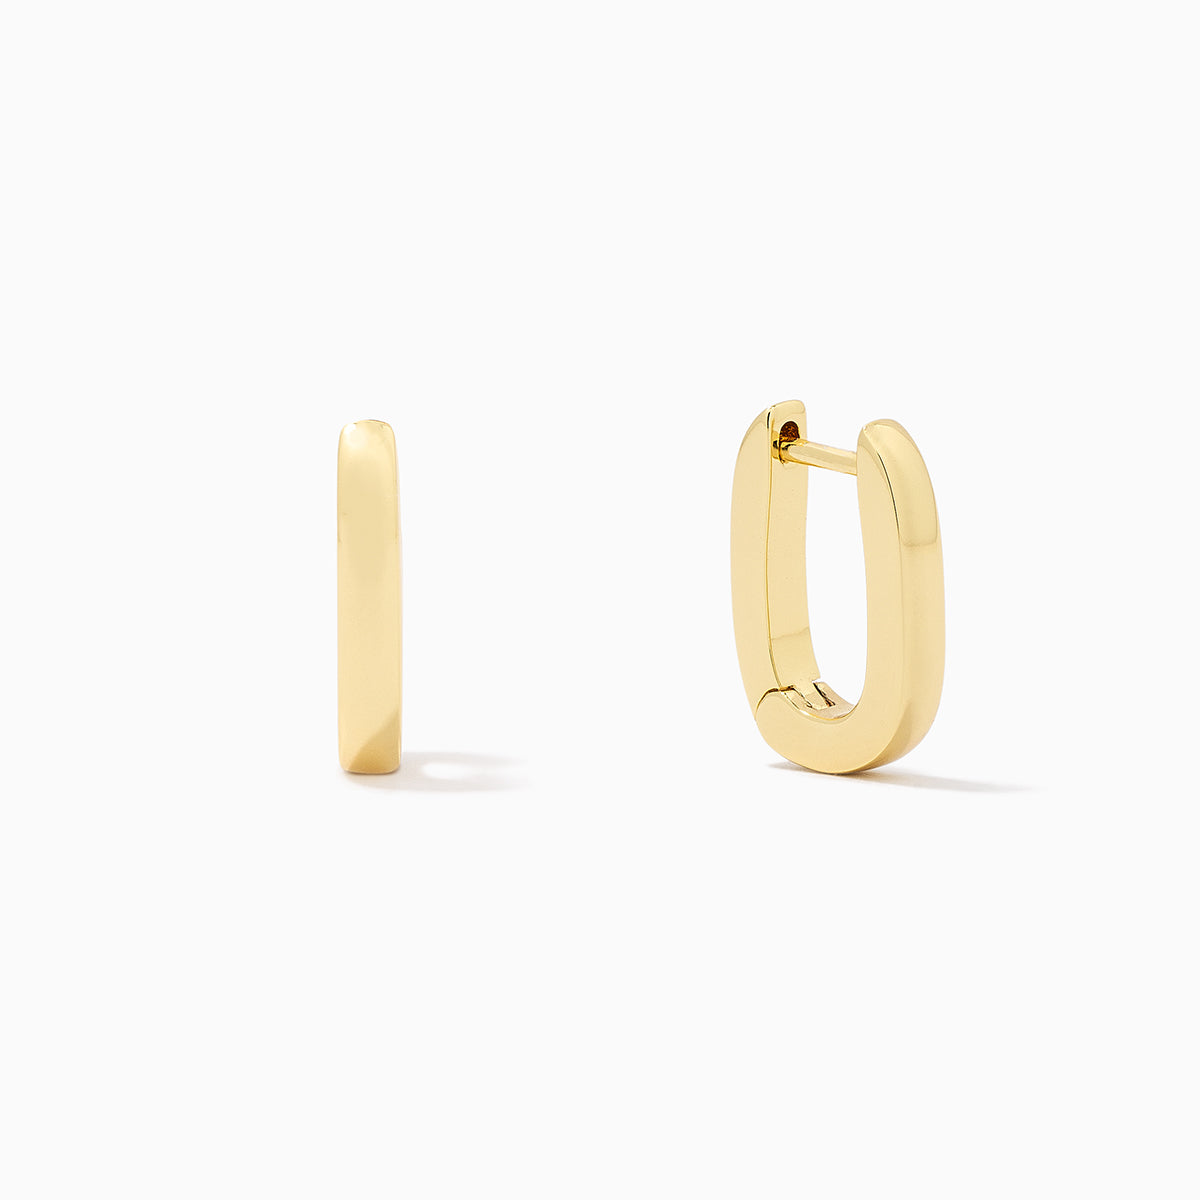 Oval Huggie Earrings in Gold | Hoops and Huggies | Uncommon James